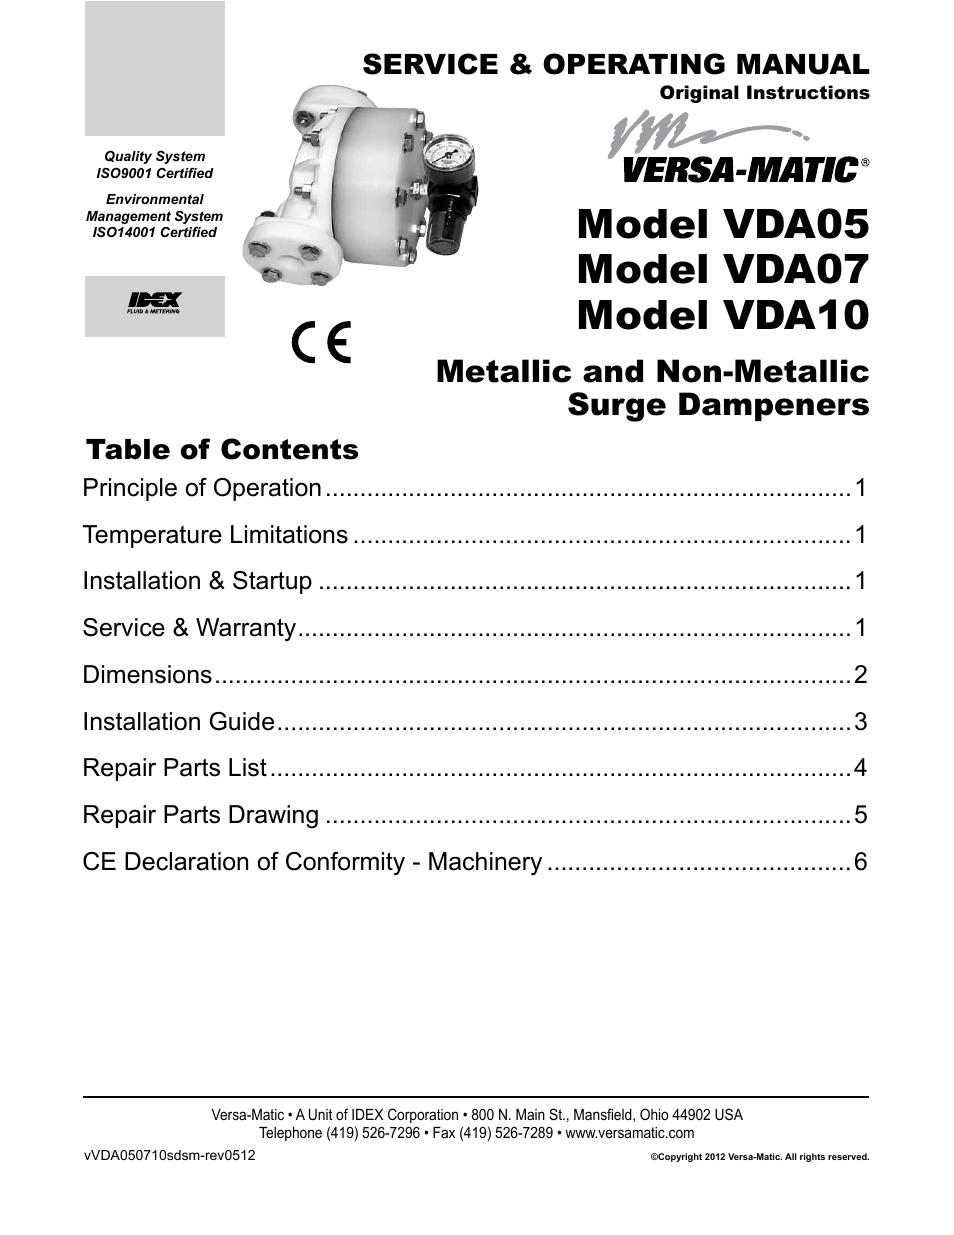 VDA07 Metallic and Non-Metallic Surge Dampeners